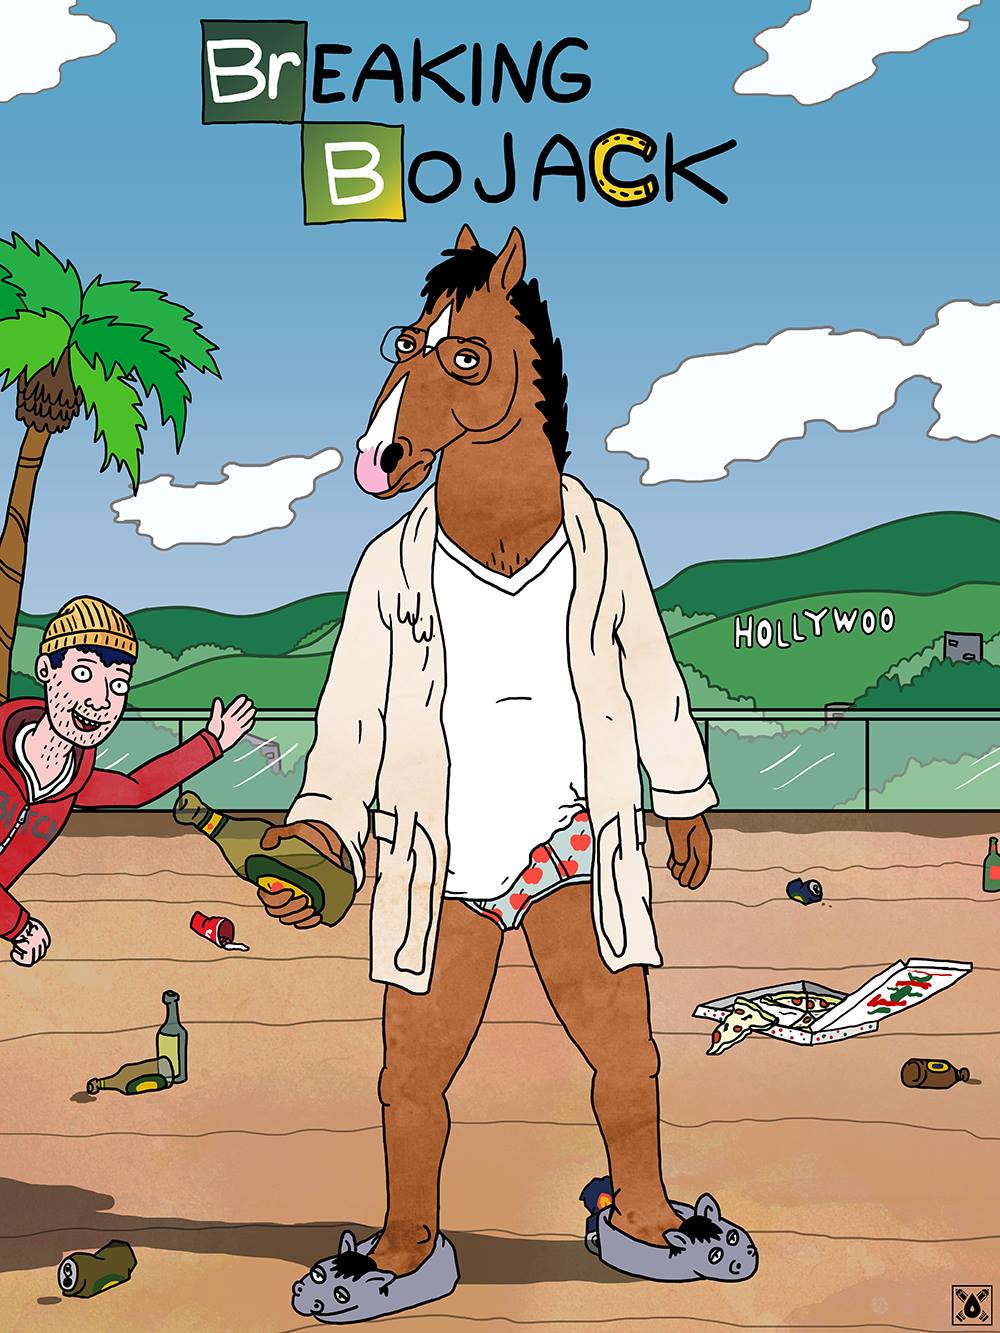 7 Reasons You Must Finish Watching 'Bojack Horseman'